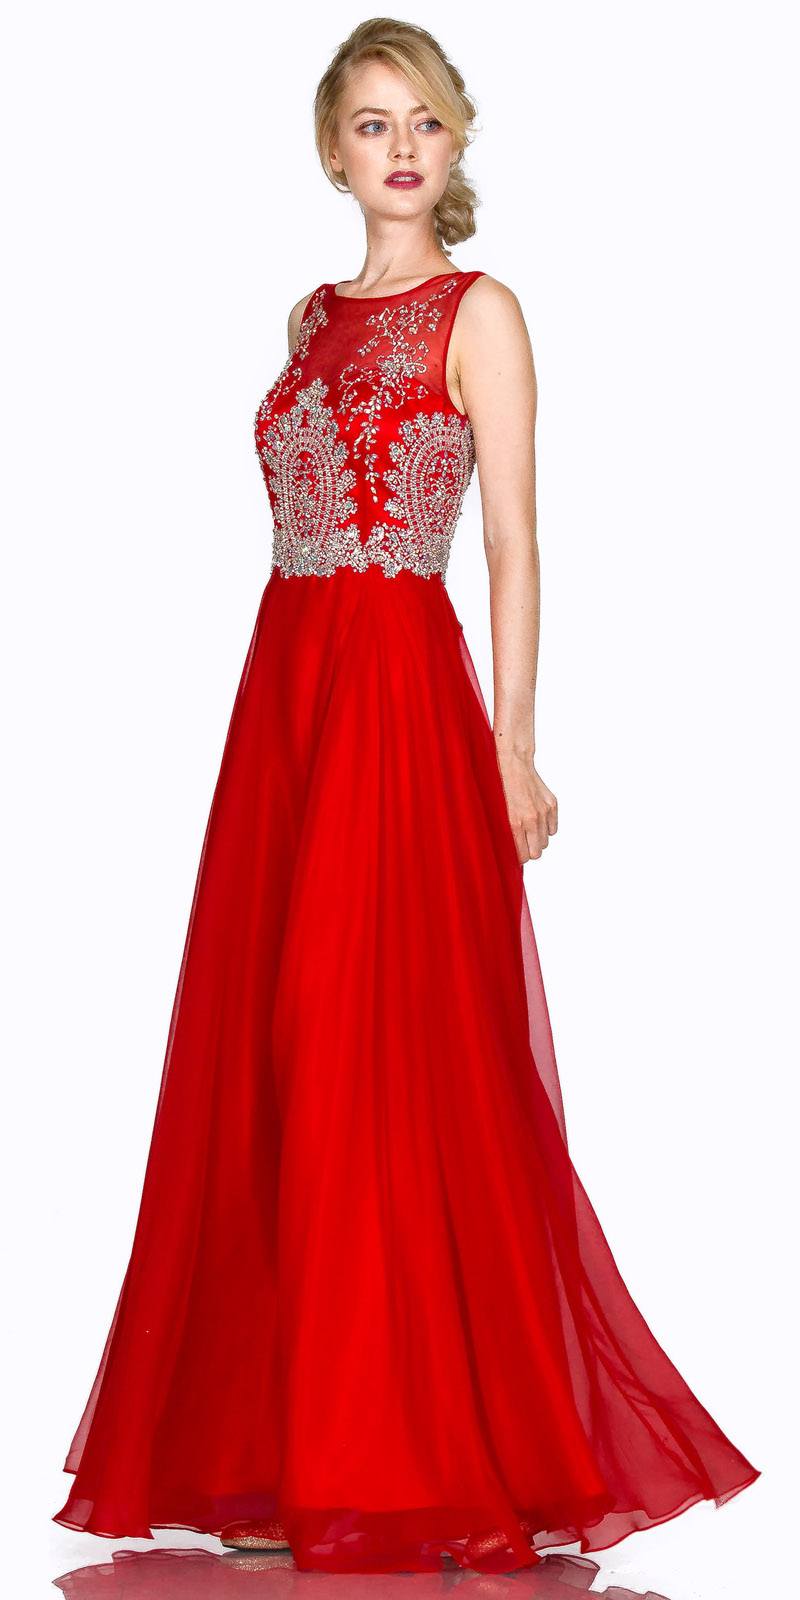 Cinderella Divine 56 Red Bateau Illusion Neckline Embellished Bodice Sleeveless Prom Gown